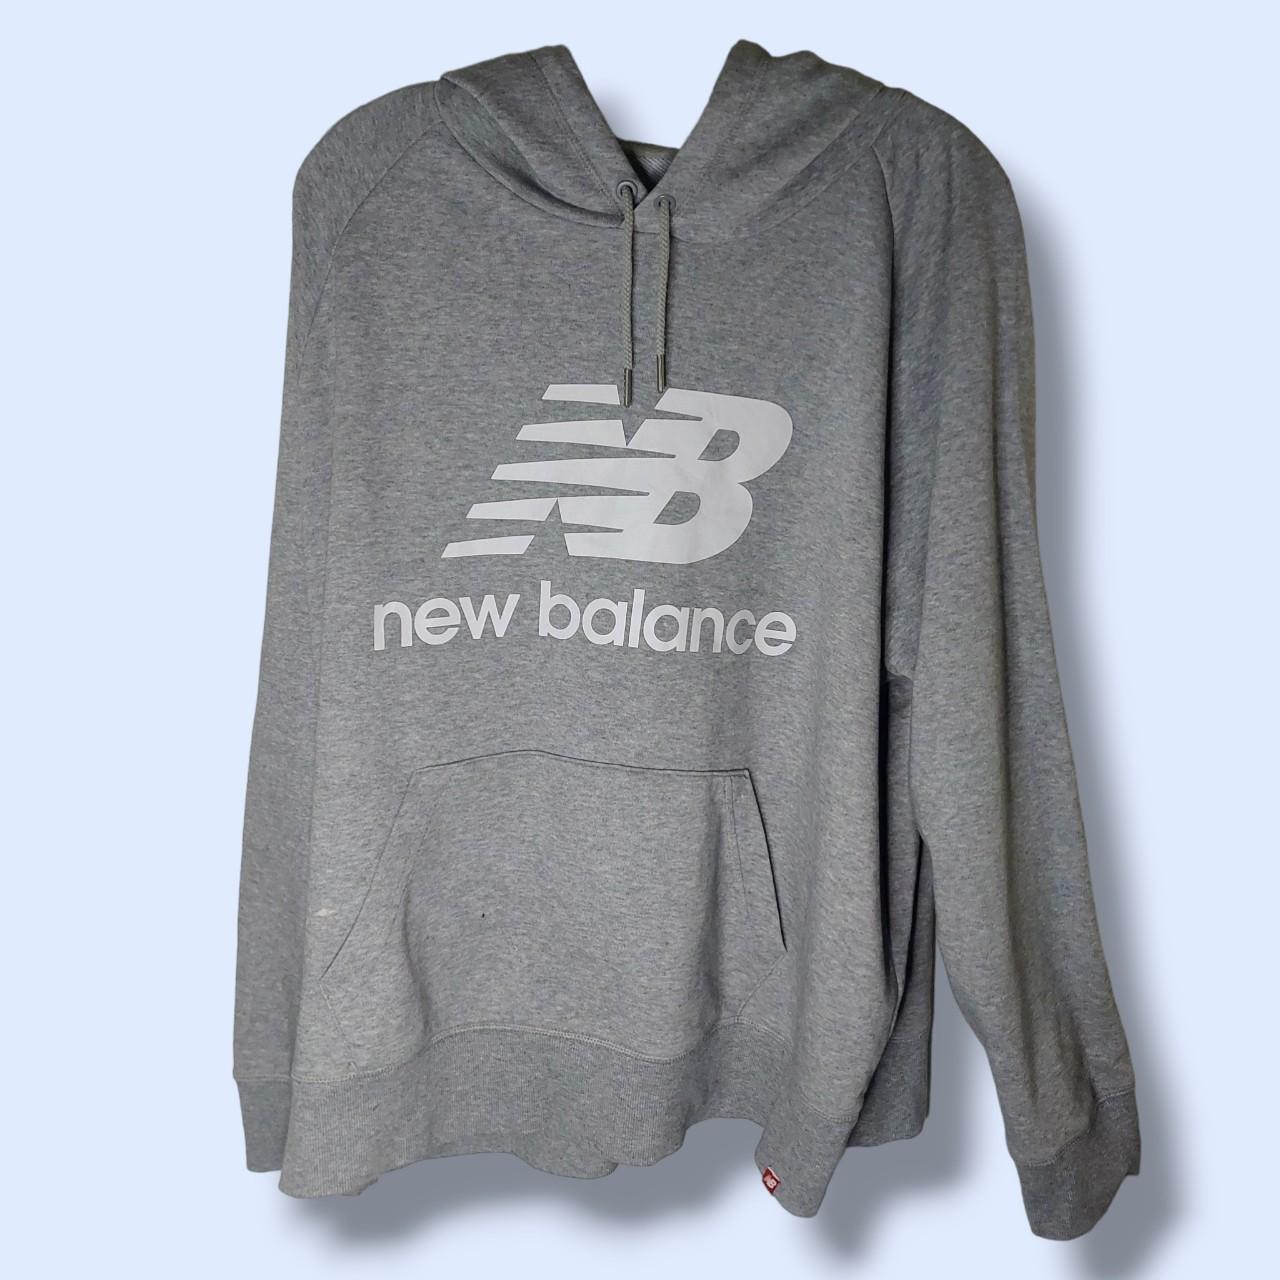 New Balance Women's Grey Sweatshirt